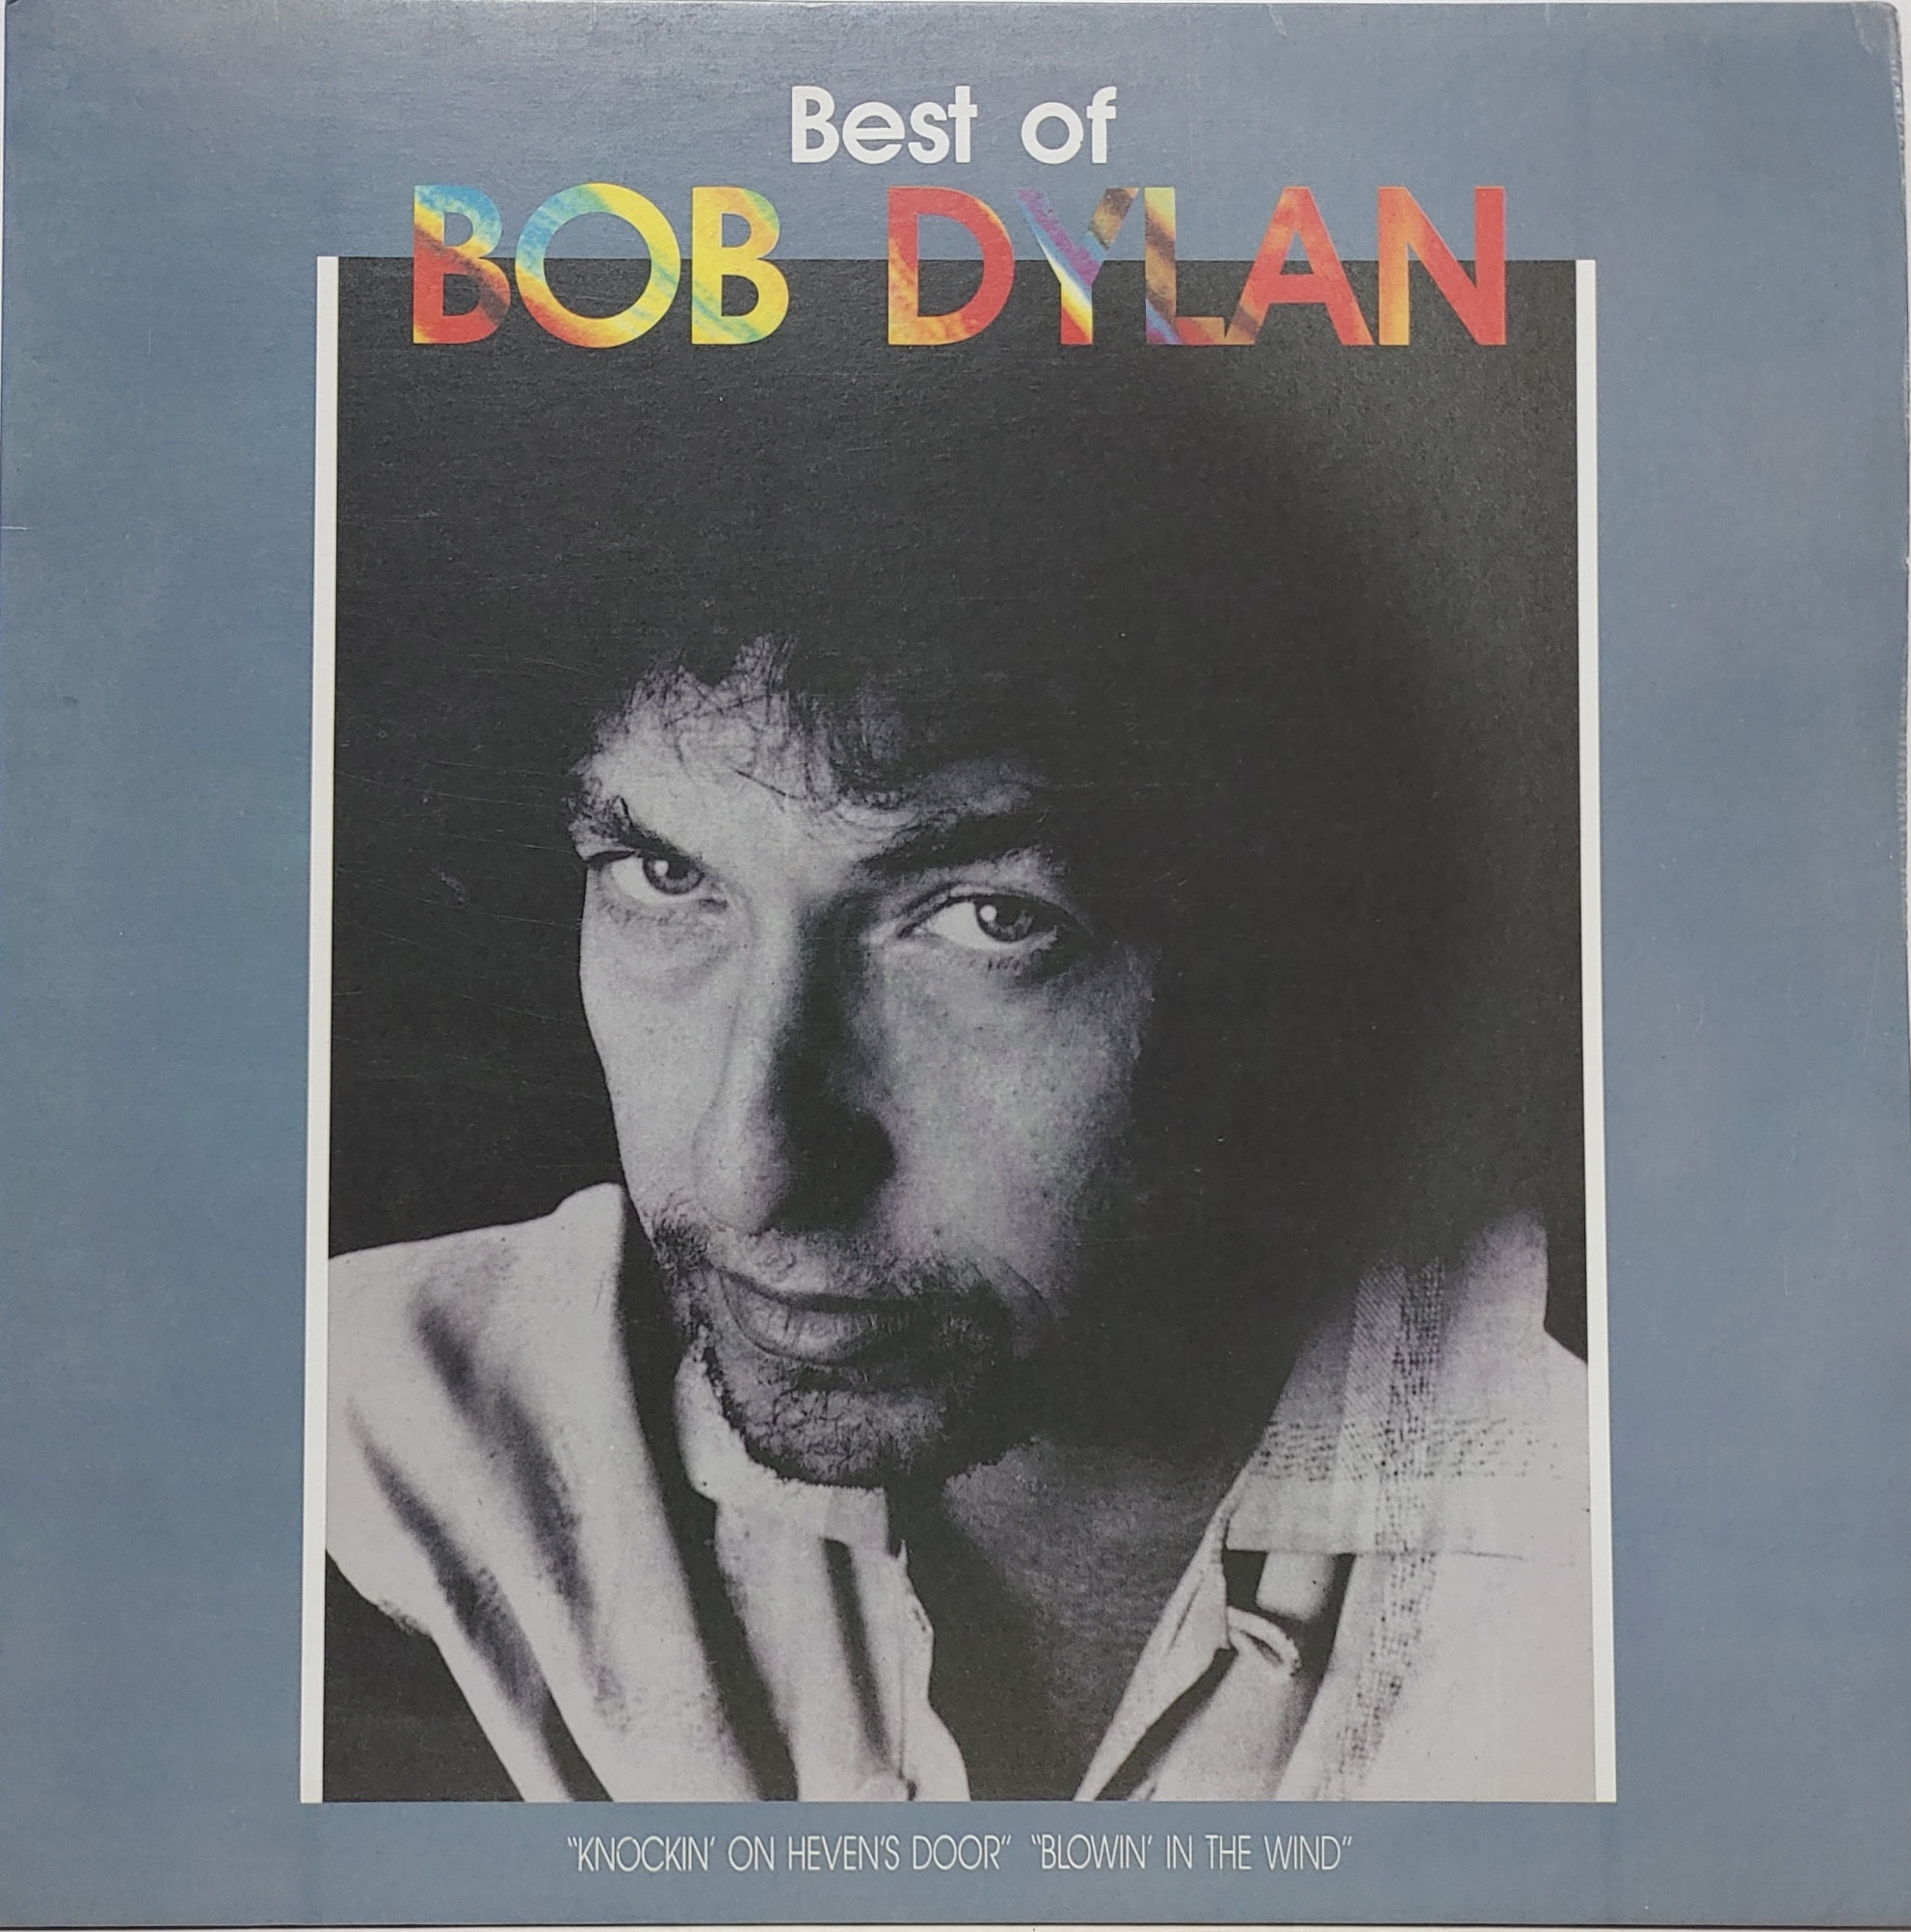 BOB DYLAN / BEST OF BOB DYLAN